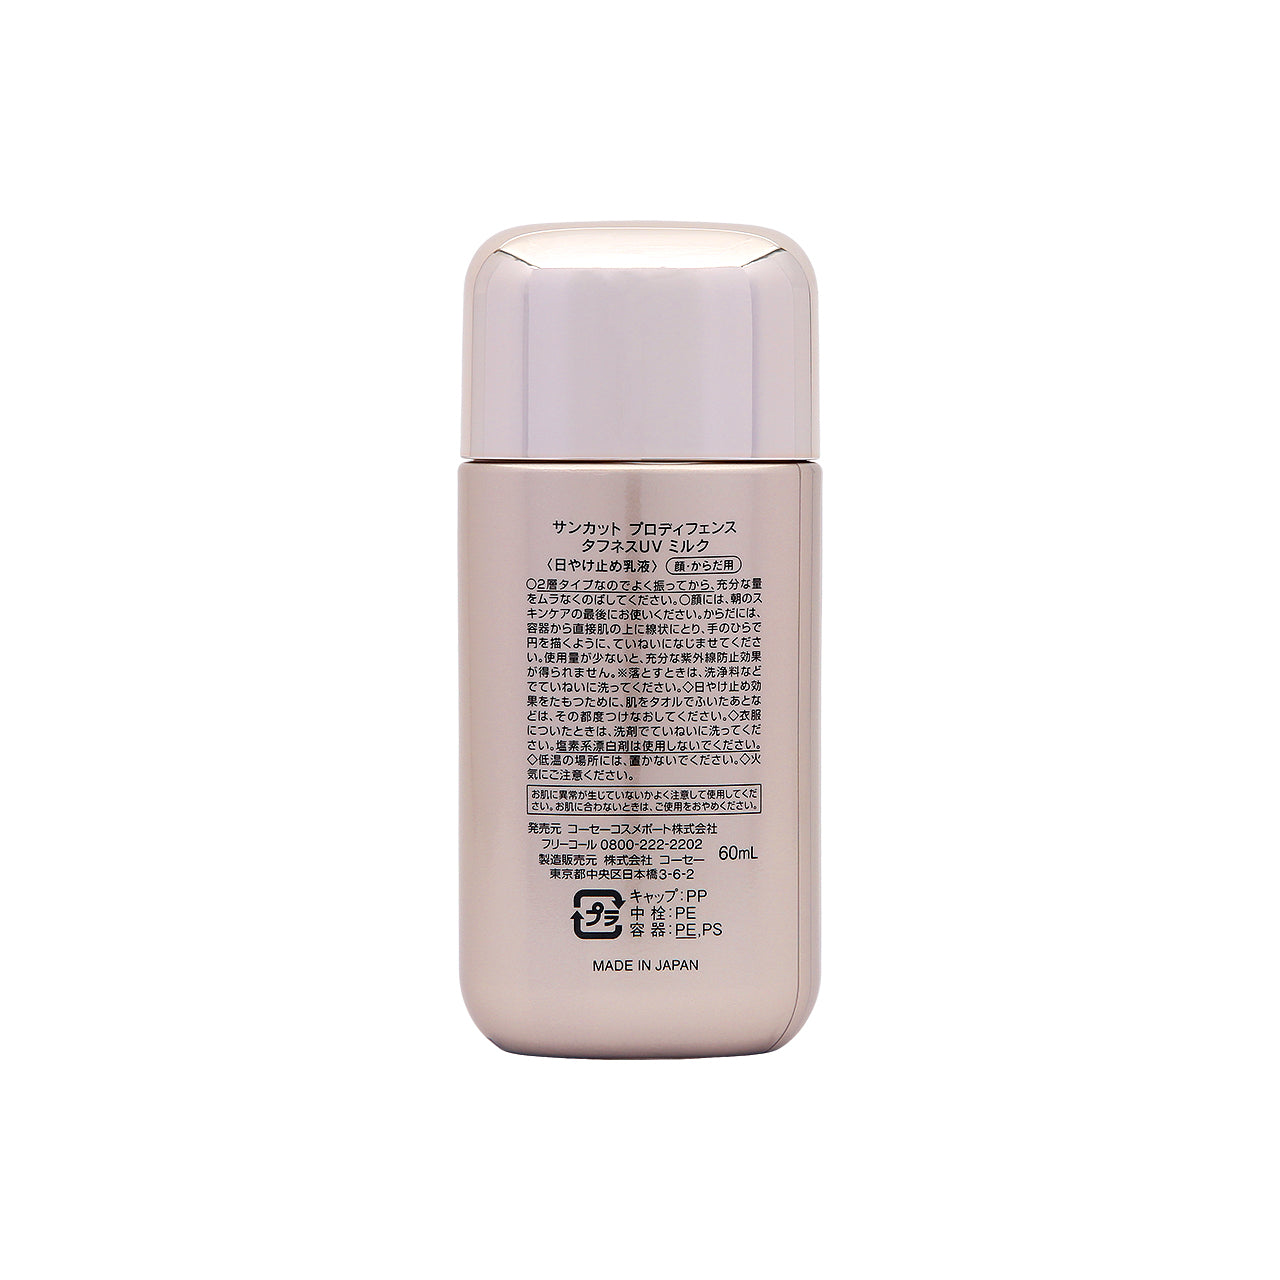 Kose Cosmeport Suncut Prodefense Toughness UV Sunscreen Milk SPF50+ PA++++ 60ml | Sasa Global eShop